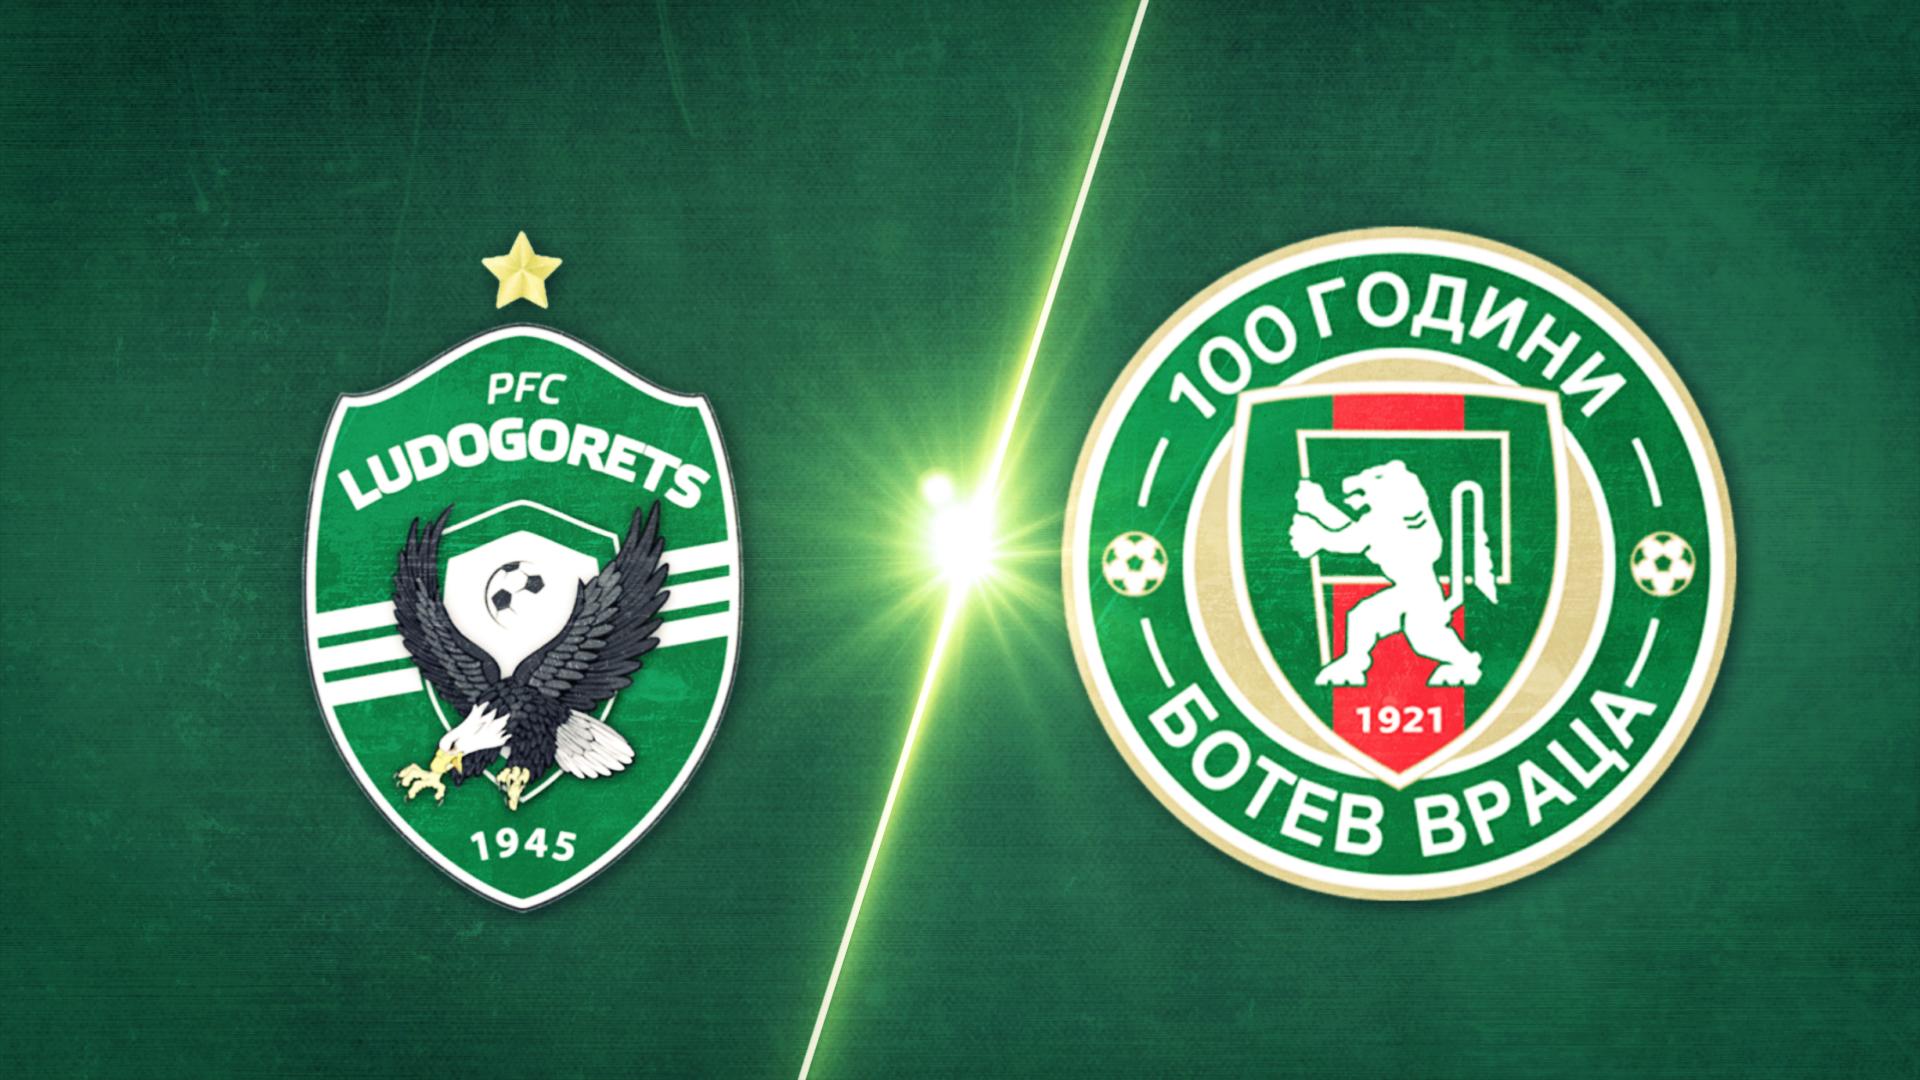 Ludogorets Razgrad PFK vs. Botev Vratsa - Game Highlights